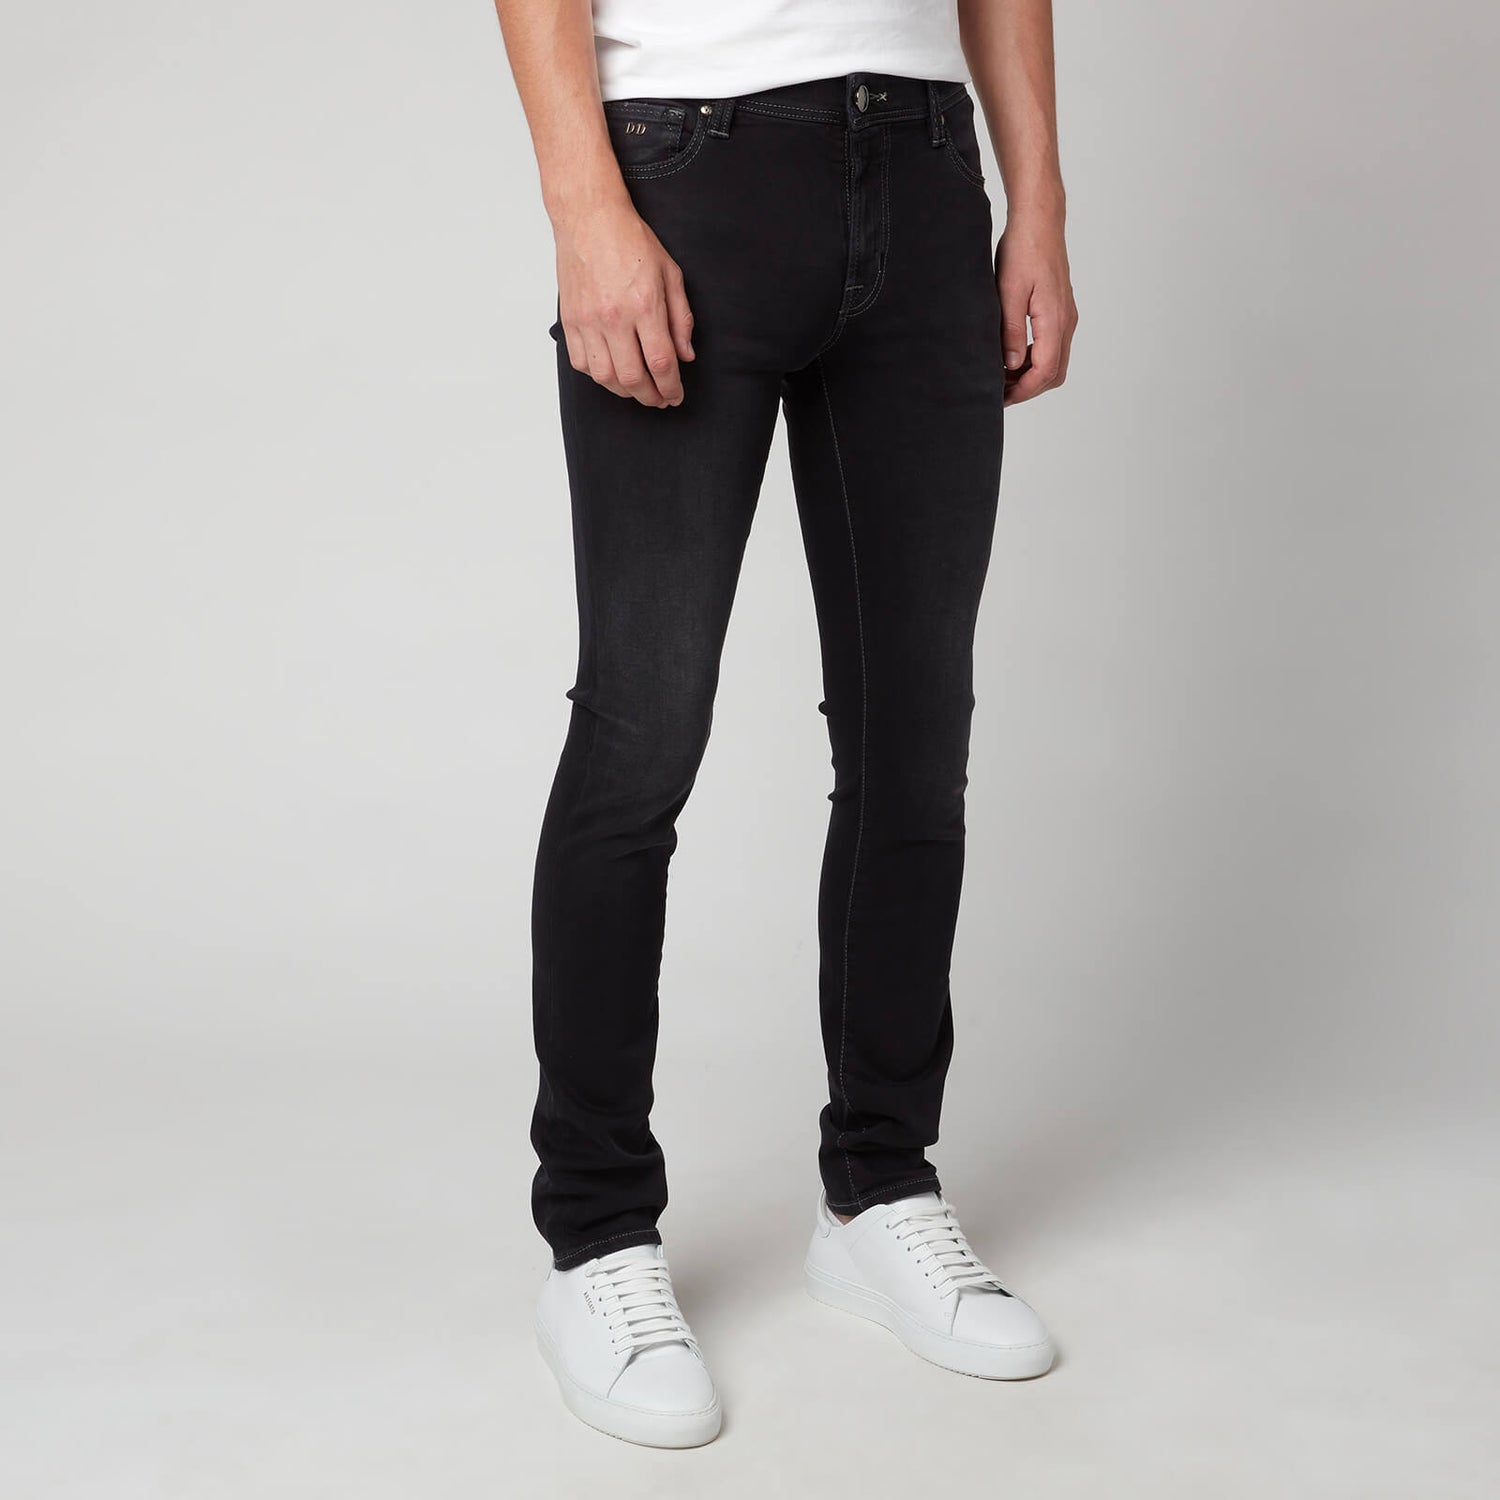 Tramarossa Men's Leonardo Slim Denim Jeans - Wash 6 - W33